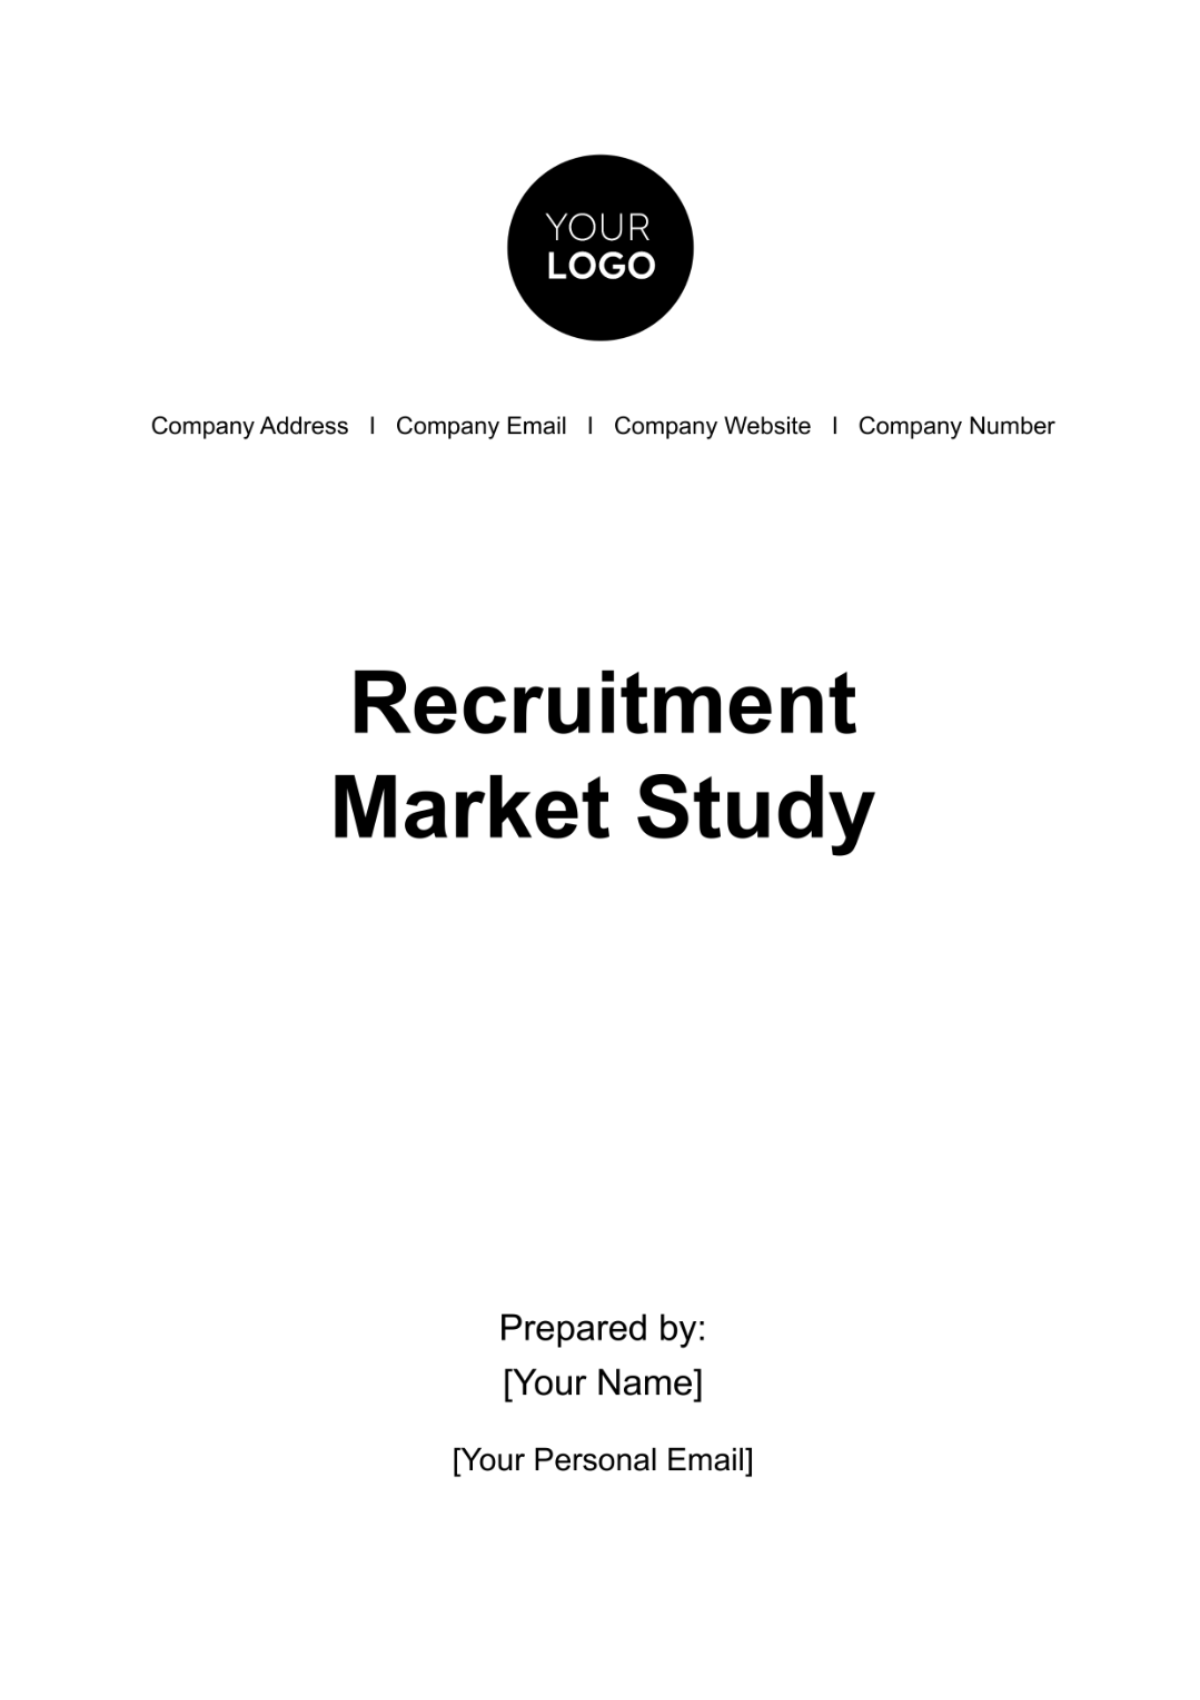 Free Recruitment Market Study HR Template